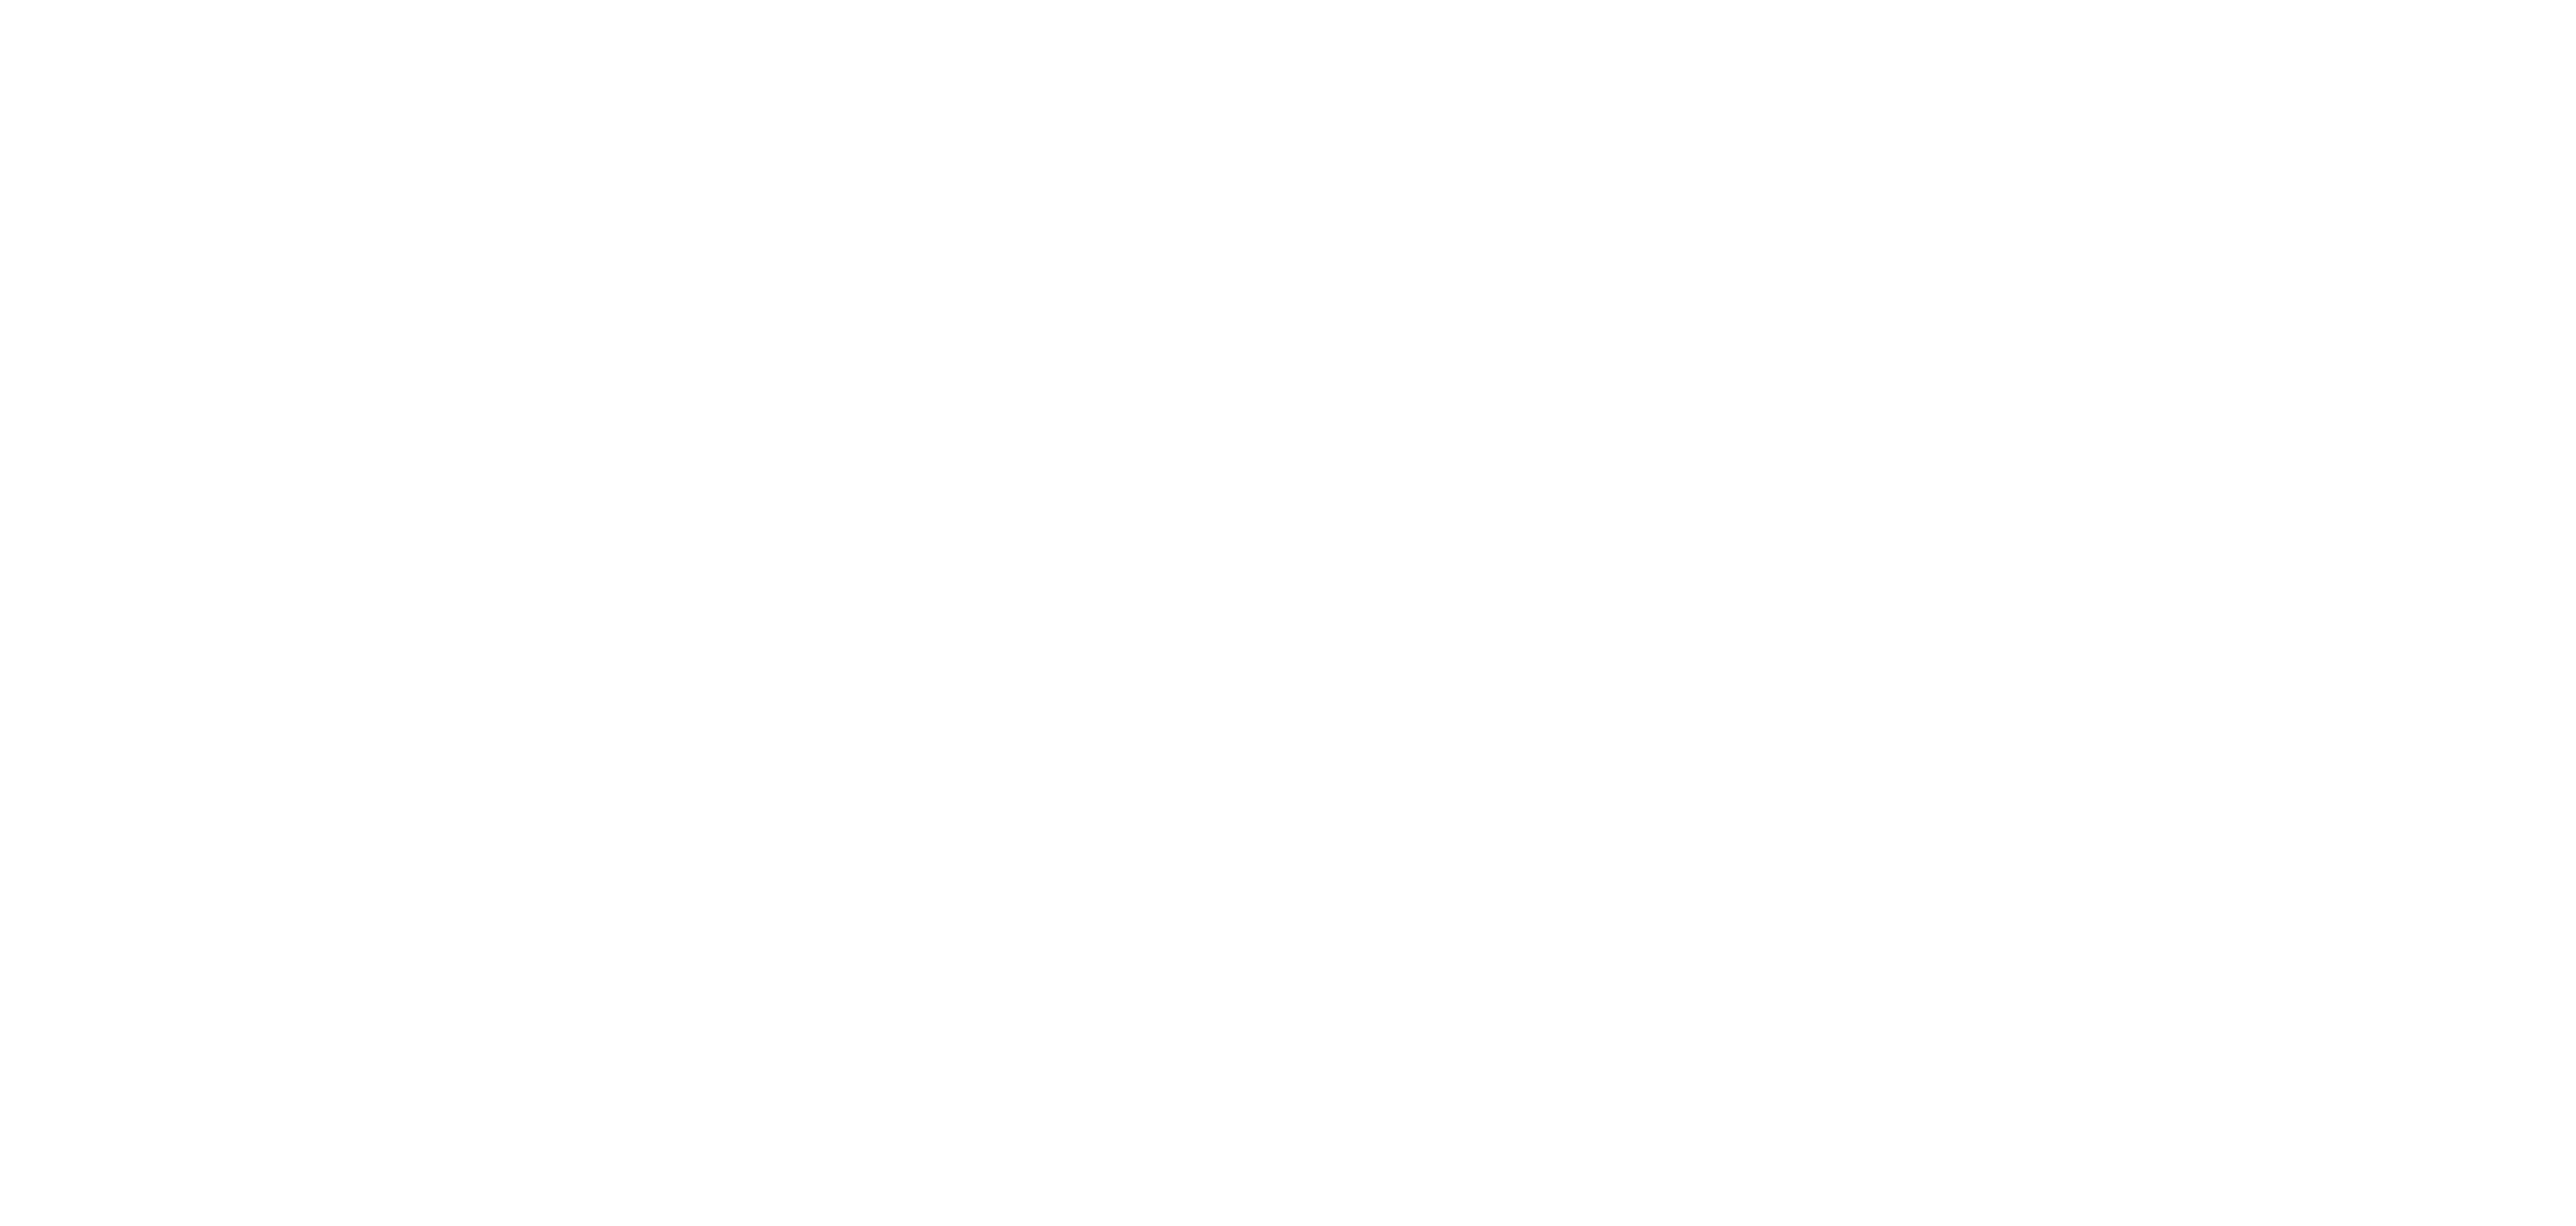 Awarded GRESB Real Estate